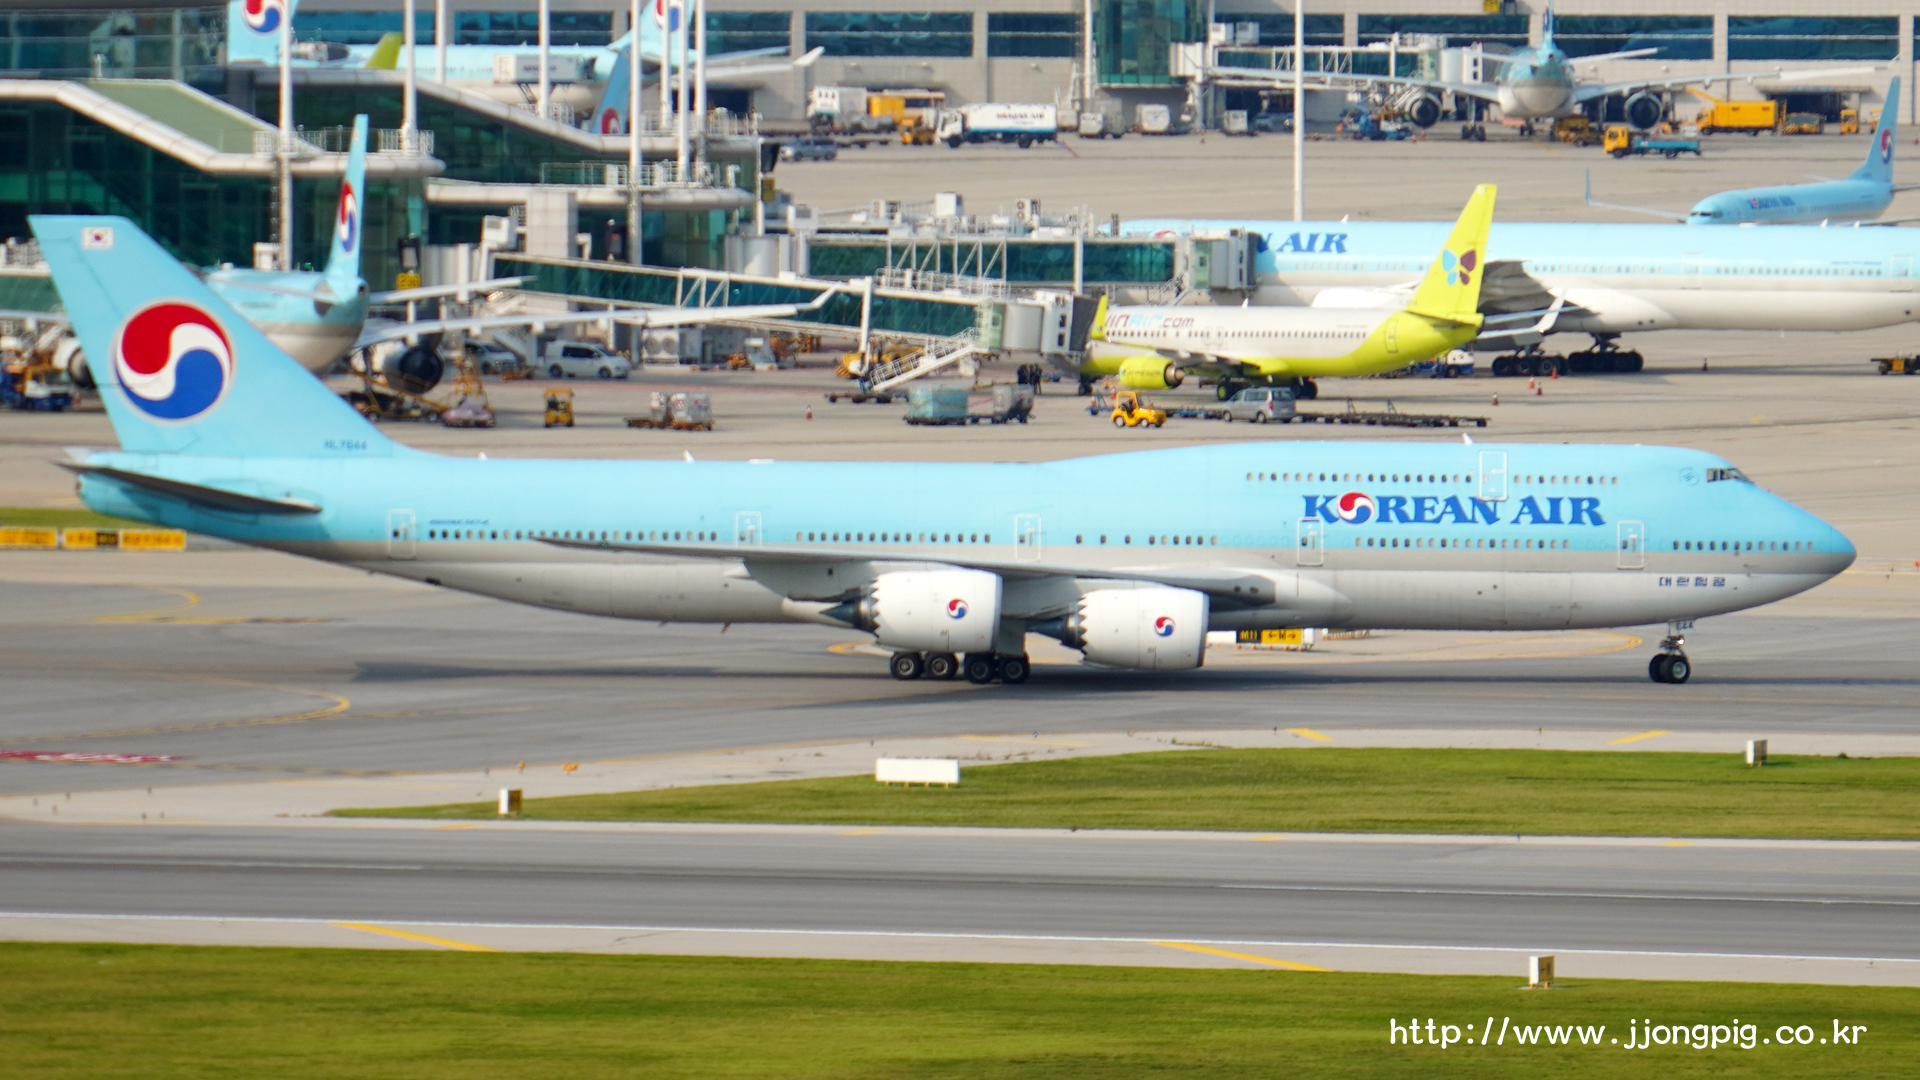 alt=Korean Air HL7644 Boeing 747-8